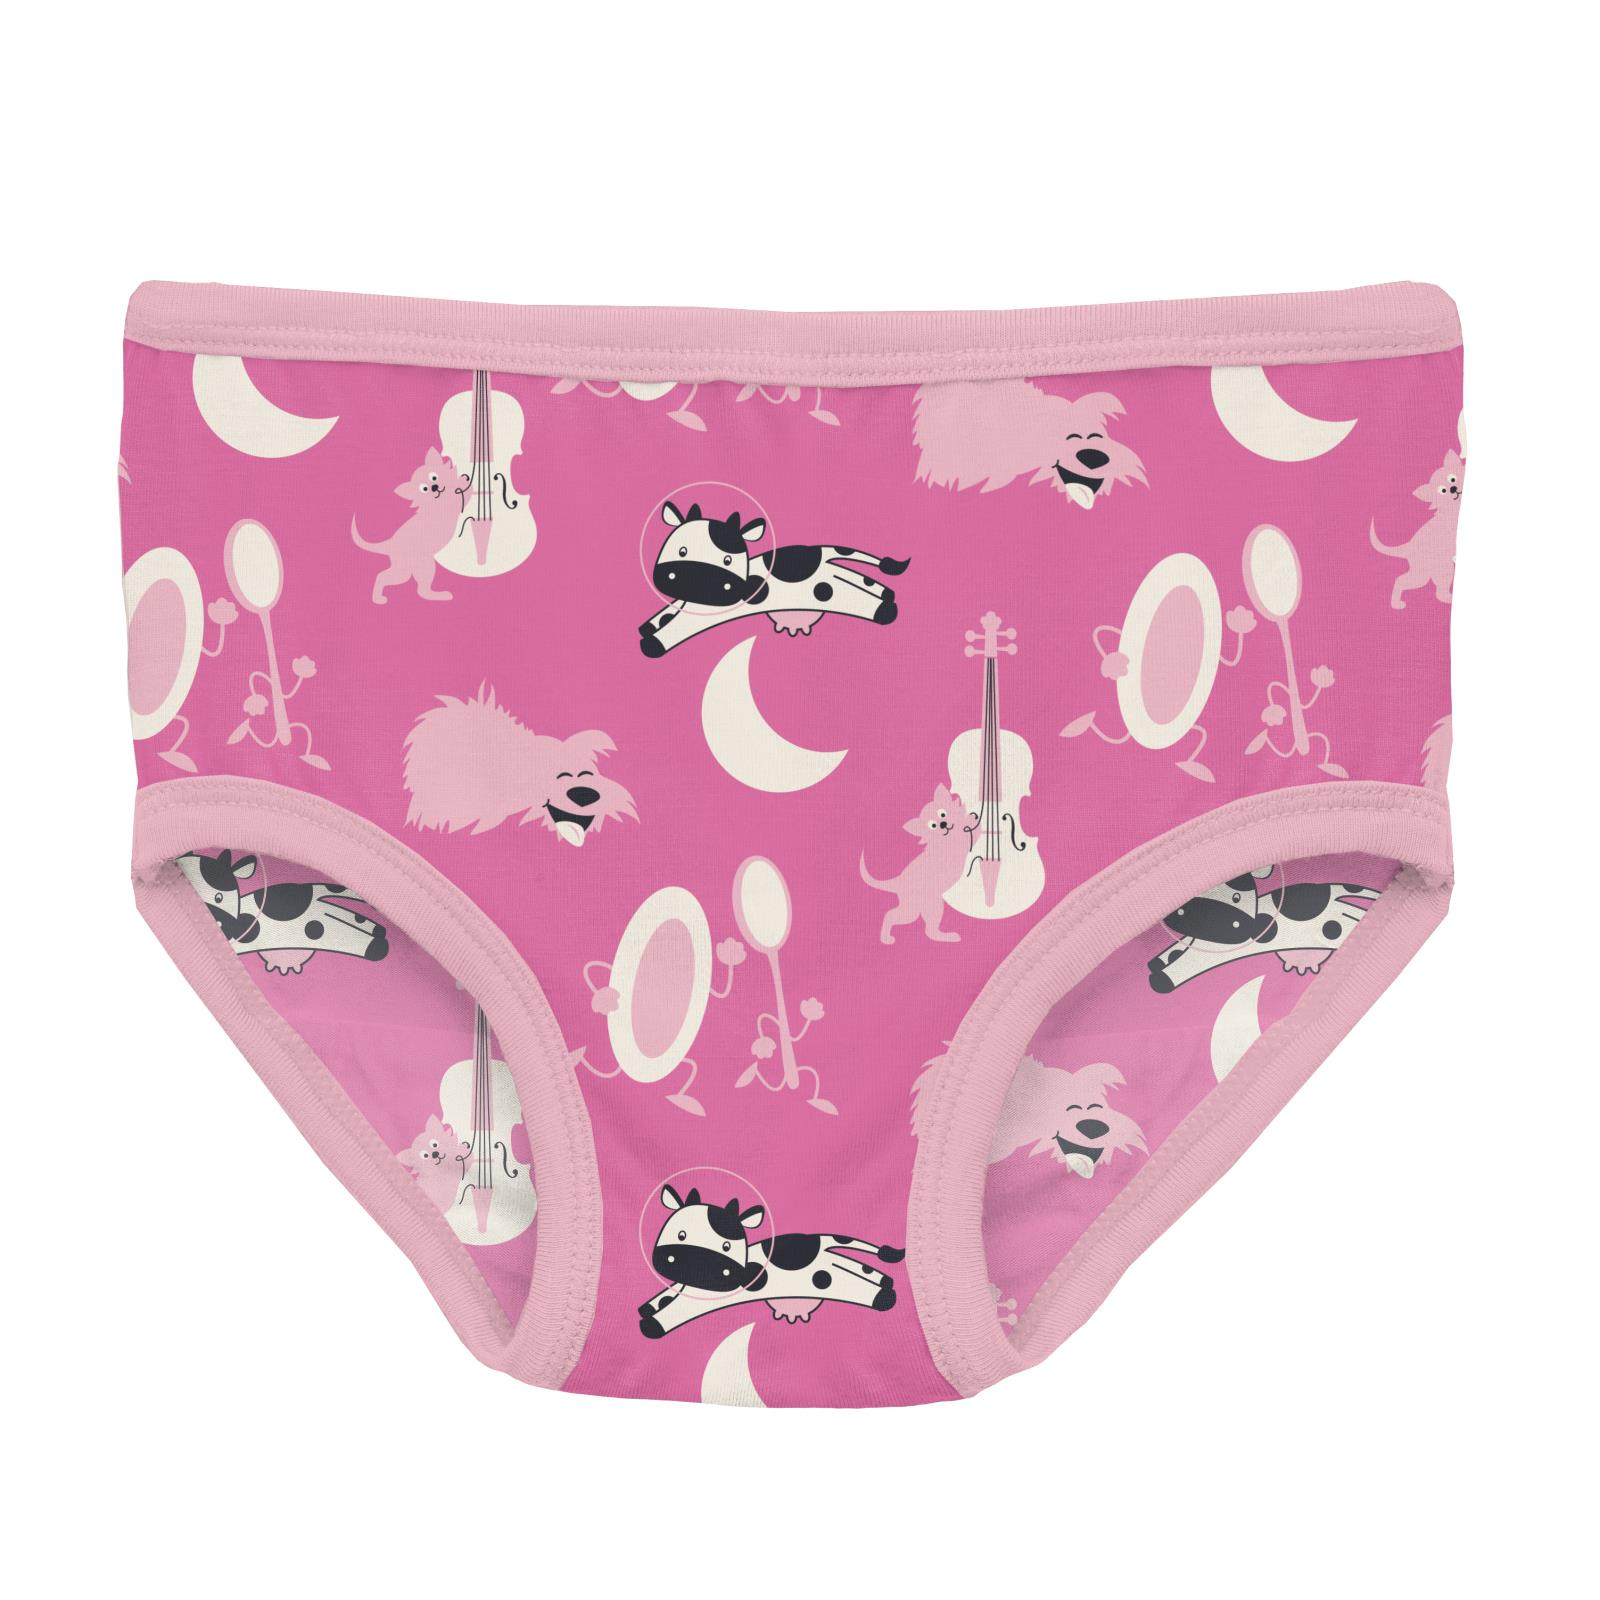 Kickee Pants Girl's Underwear: Cake Pop Swan Princess